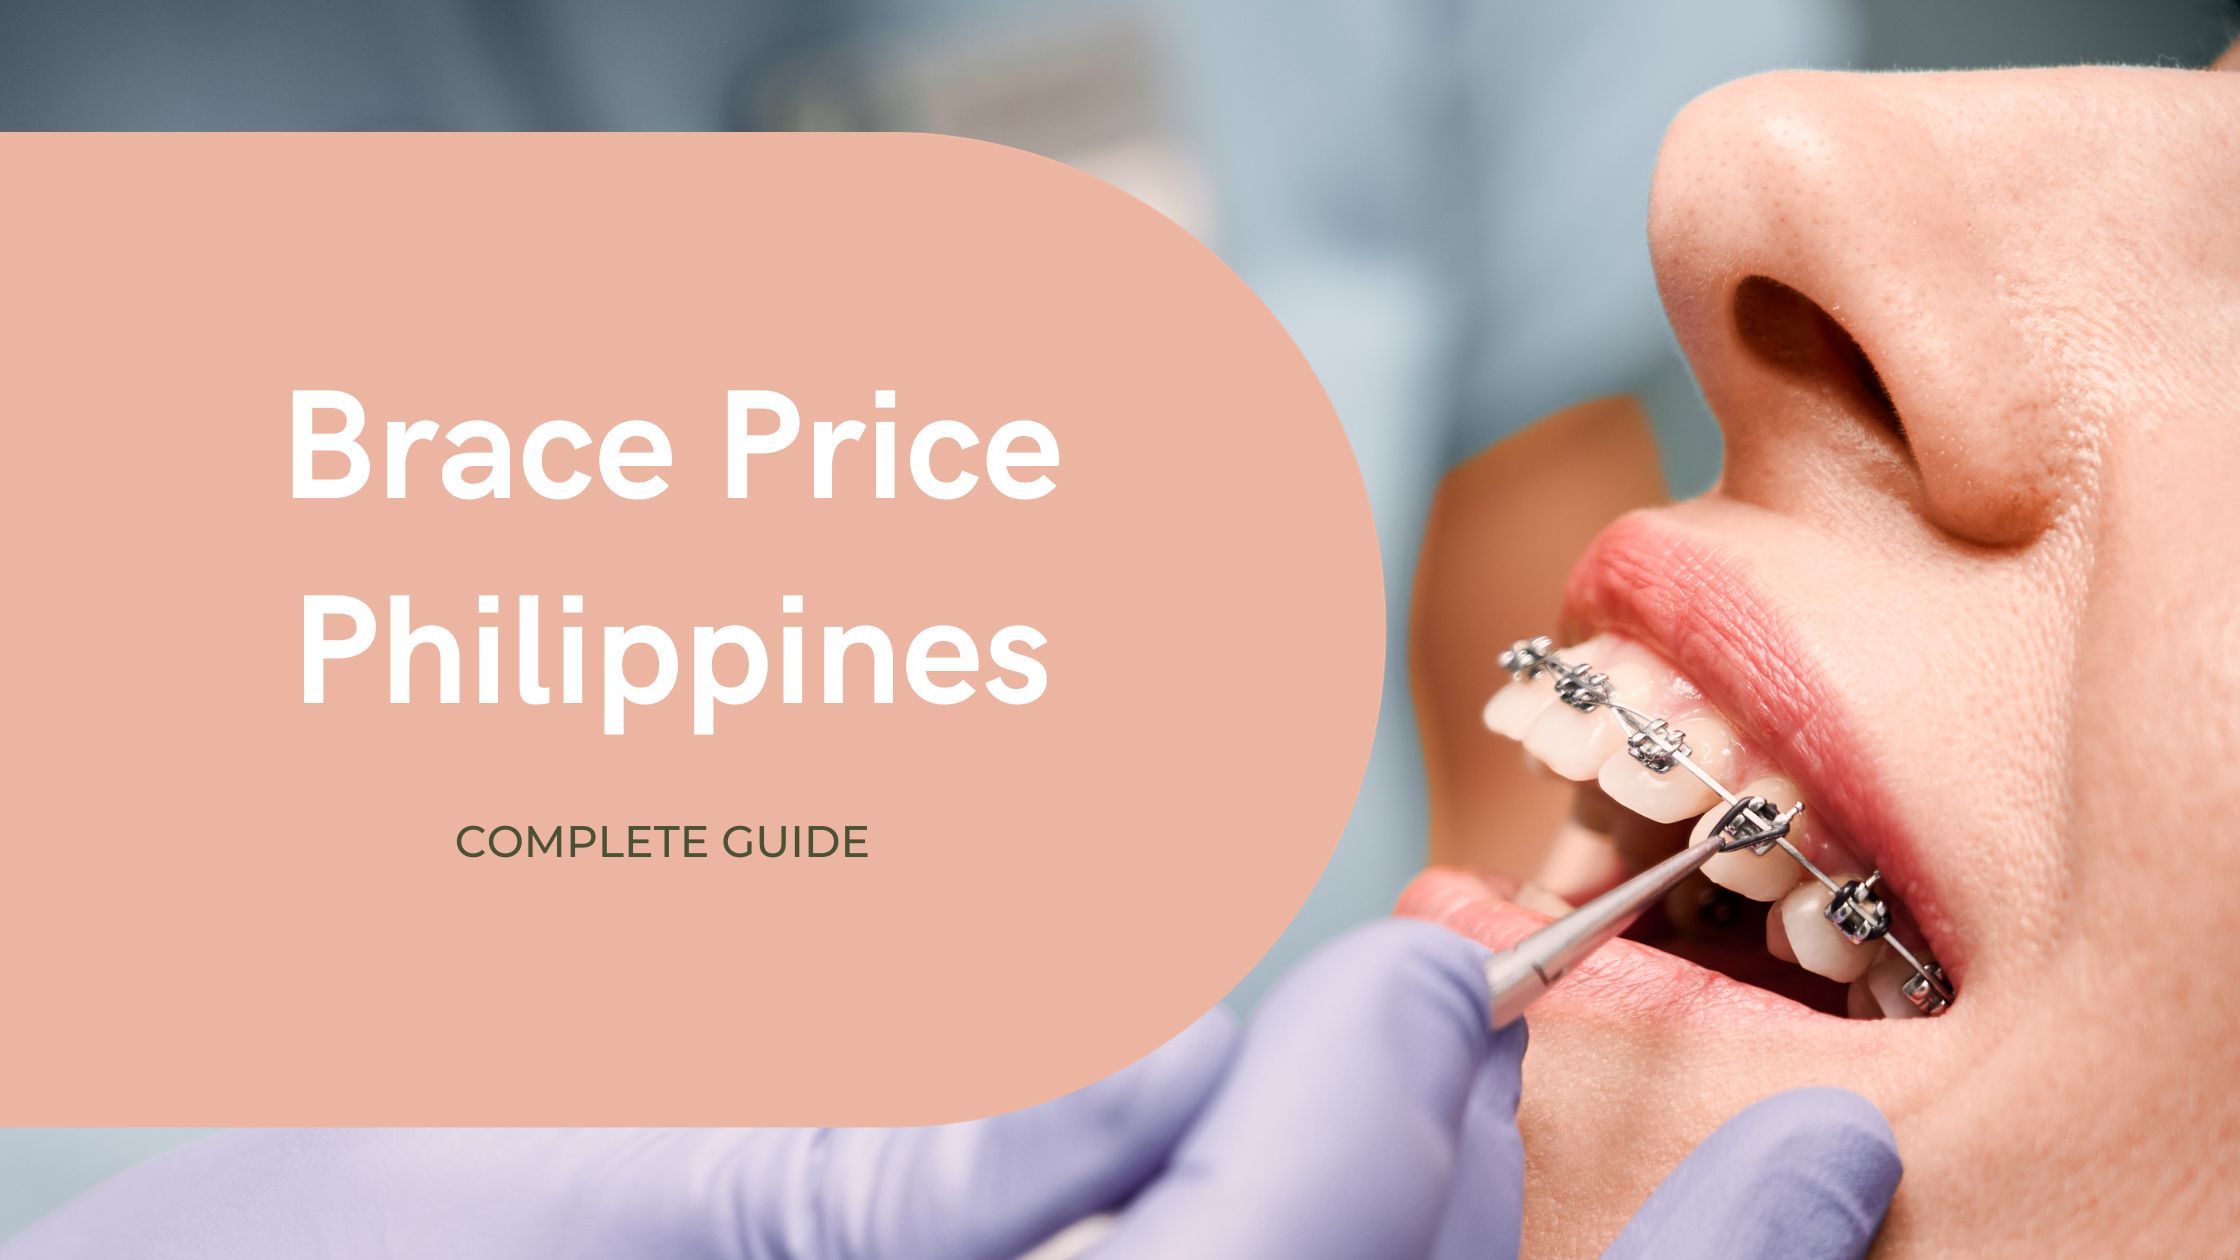 Brace Price Philippines